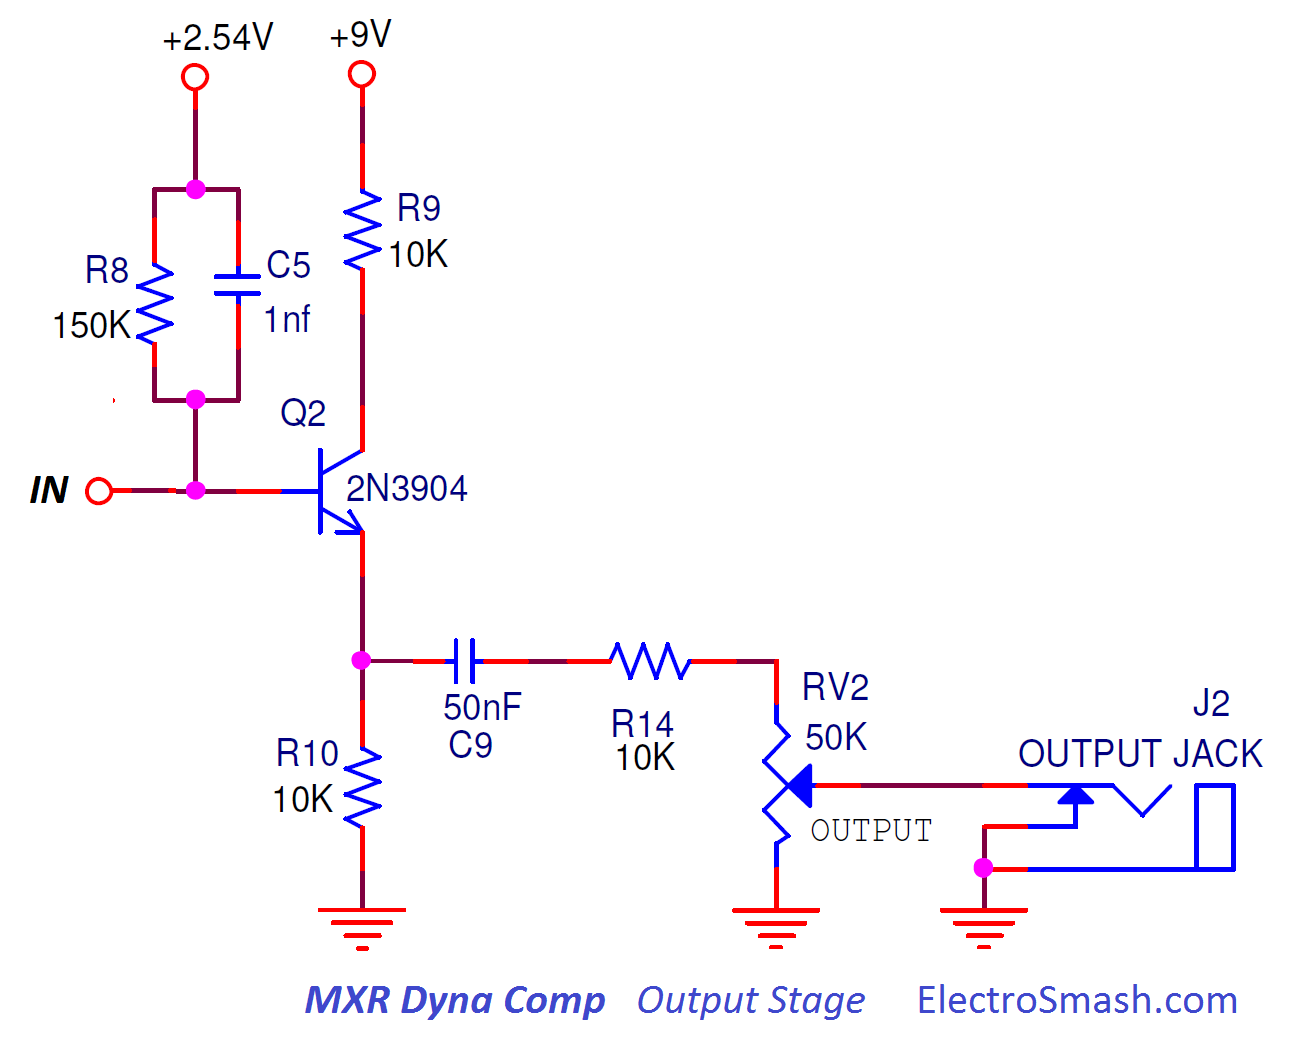 mxr dyna comp output stage